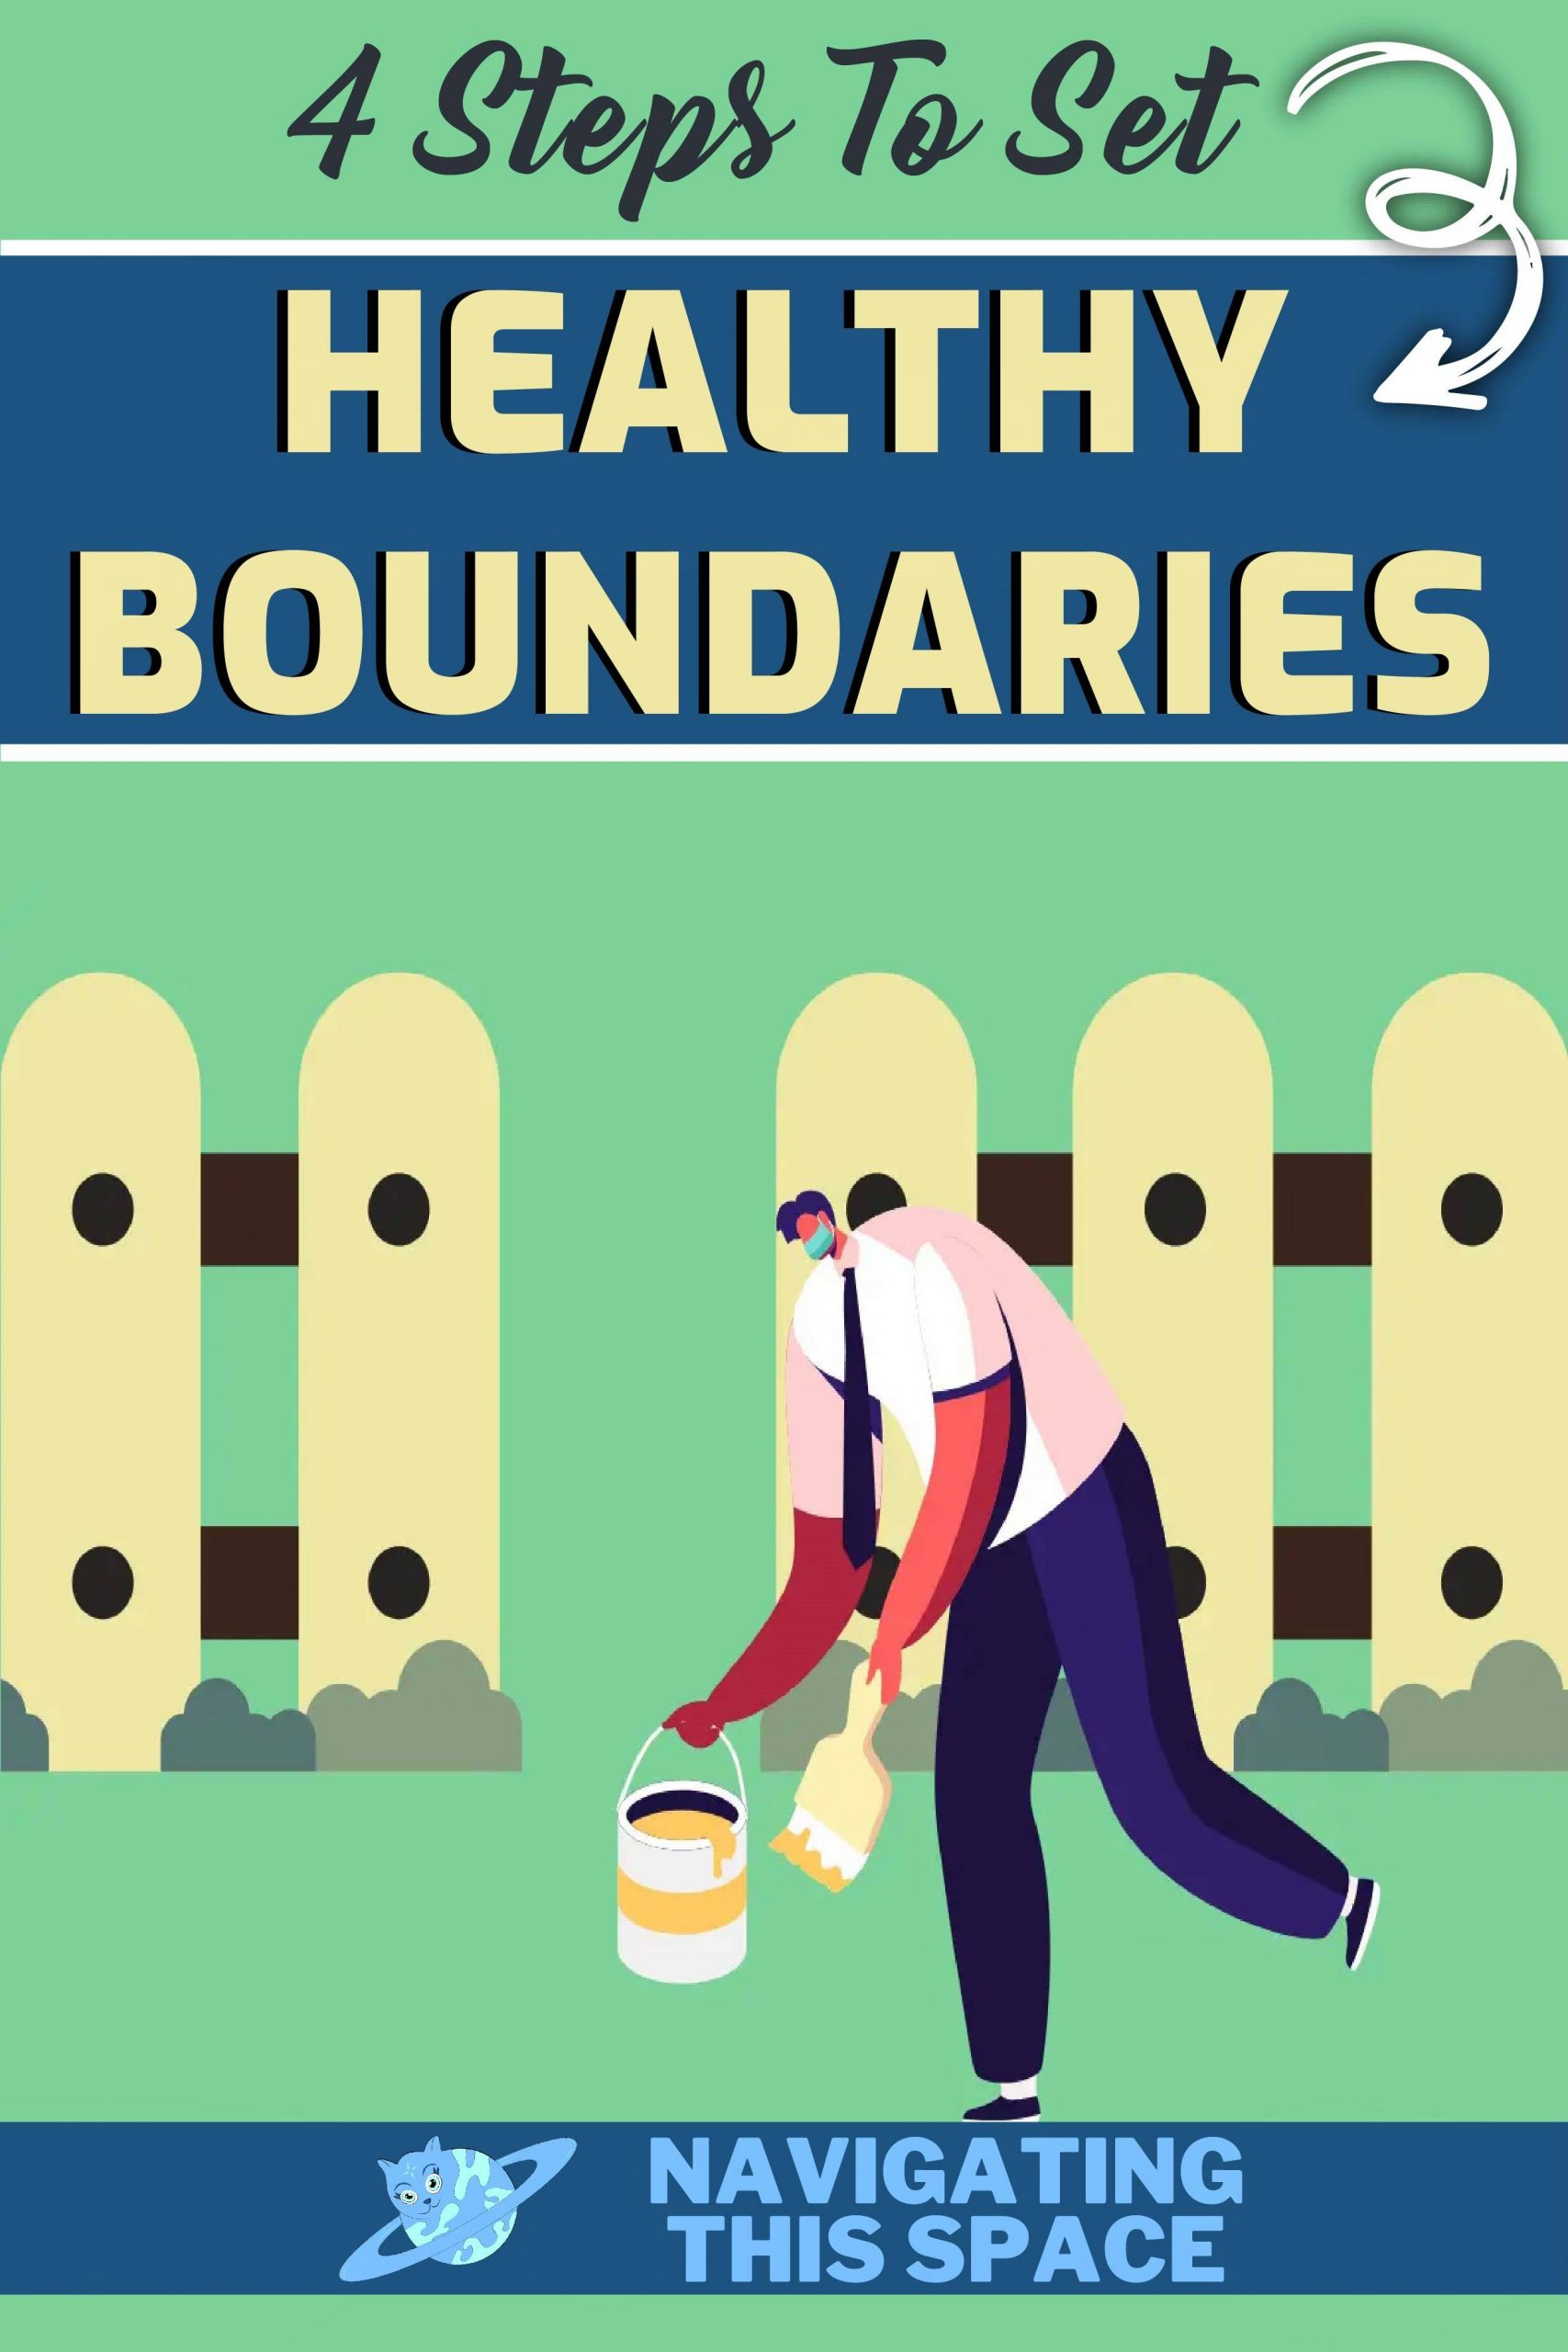 4 Steps to set healthy boundaries